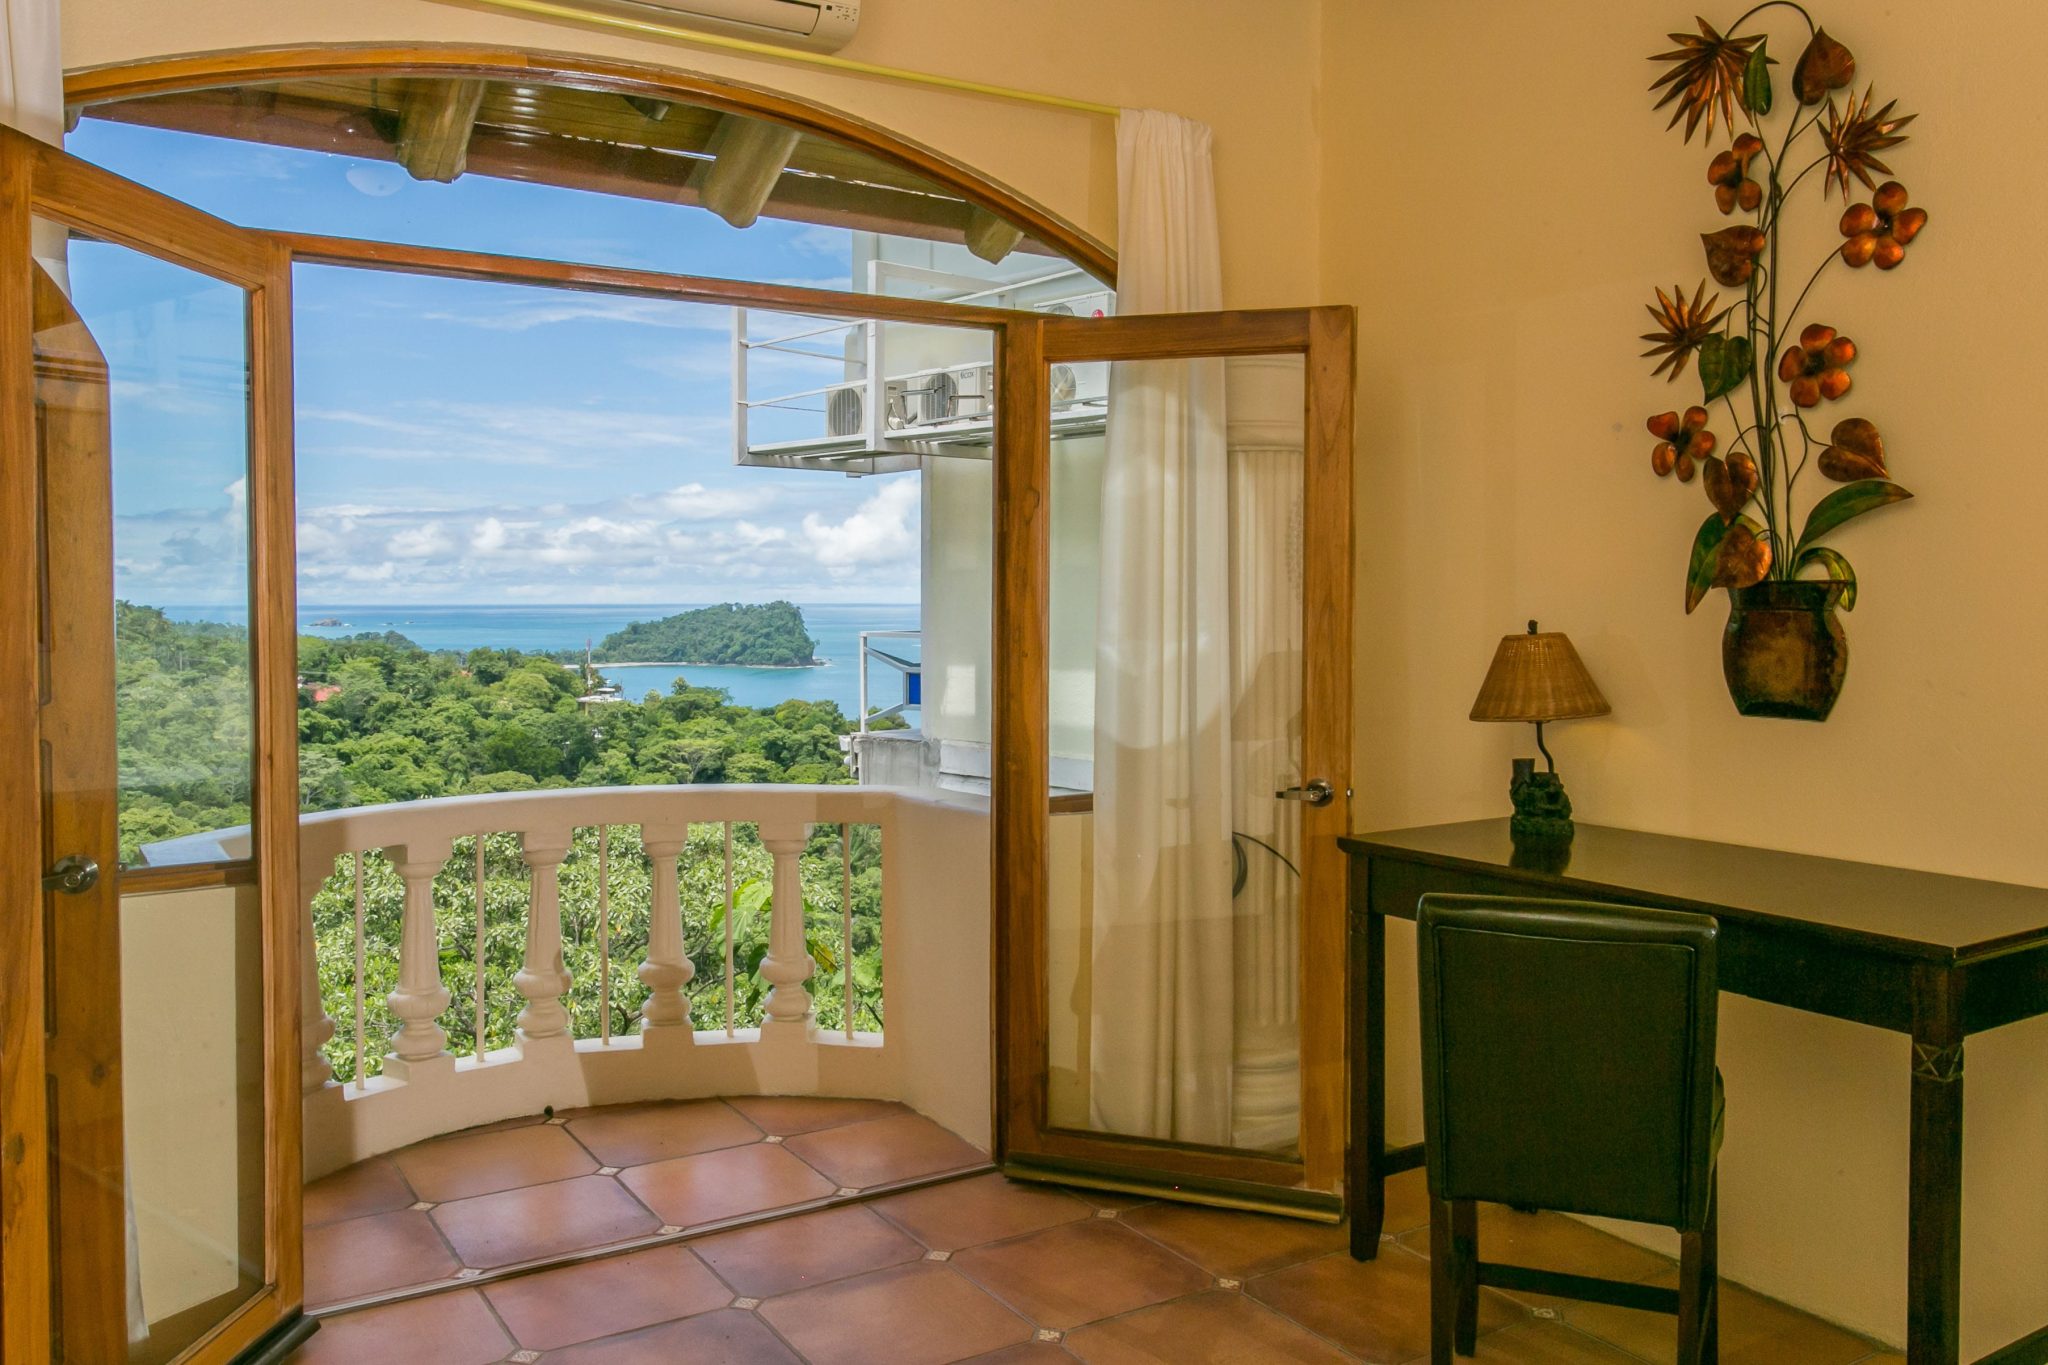 1/5 ACR 6Bedr. Ocean View Home w/Views Of Manuel Antonio Park US$ 949K